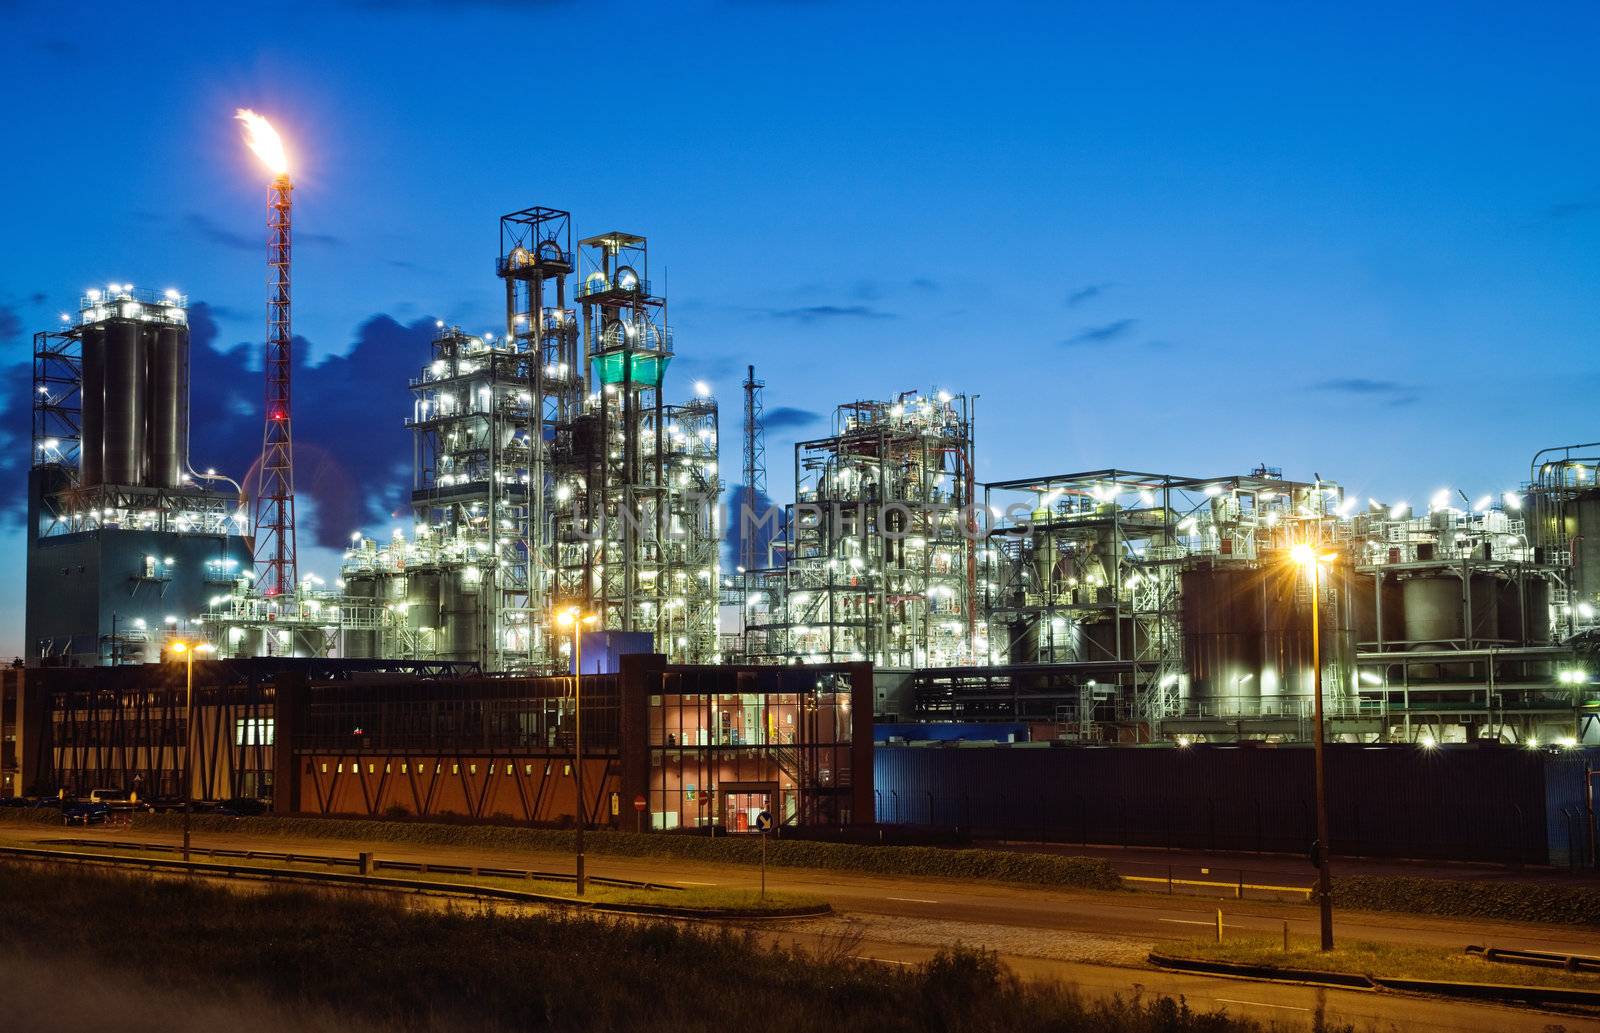 Operational petrochemical plant in twilight (Anwerp port, Belgium)